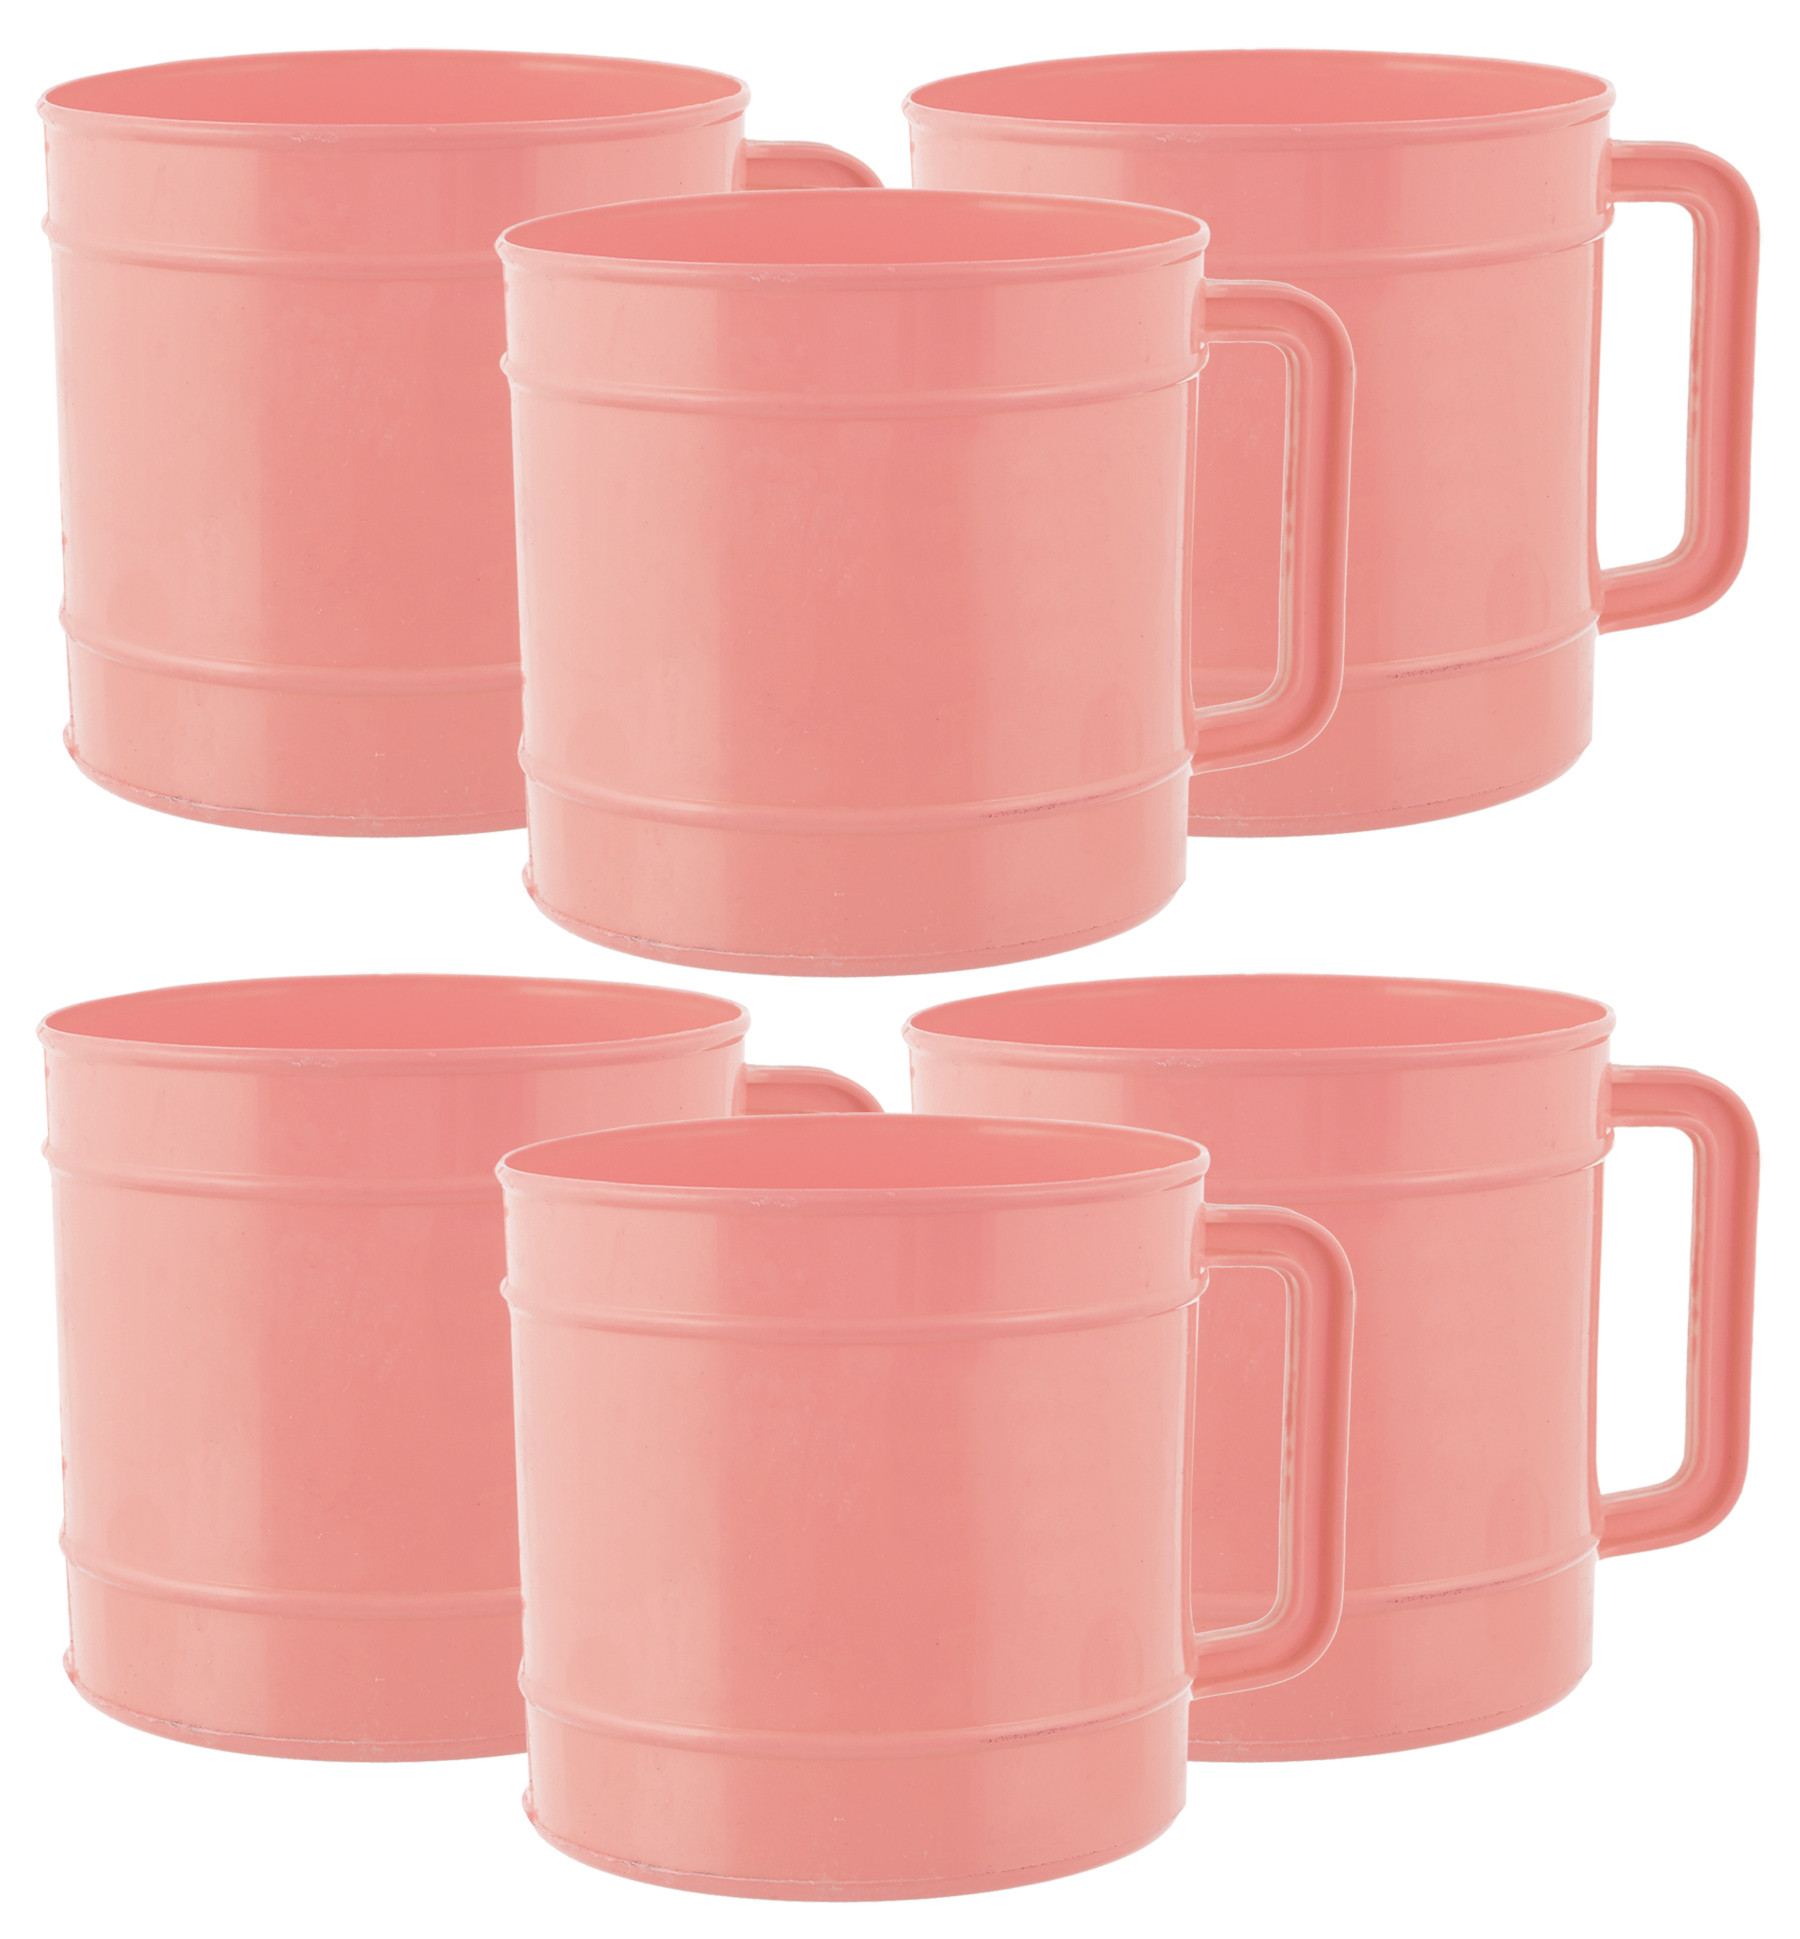 Kuber Industries Plastic Bathroom Mug, 1 Ltr.(Pink)